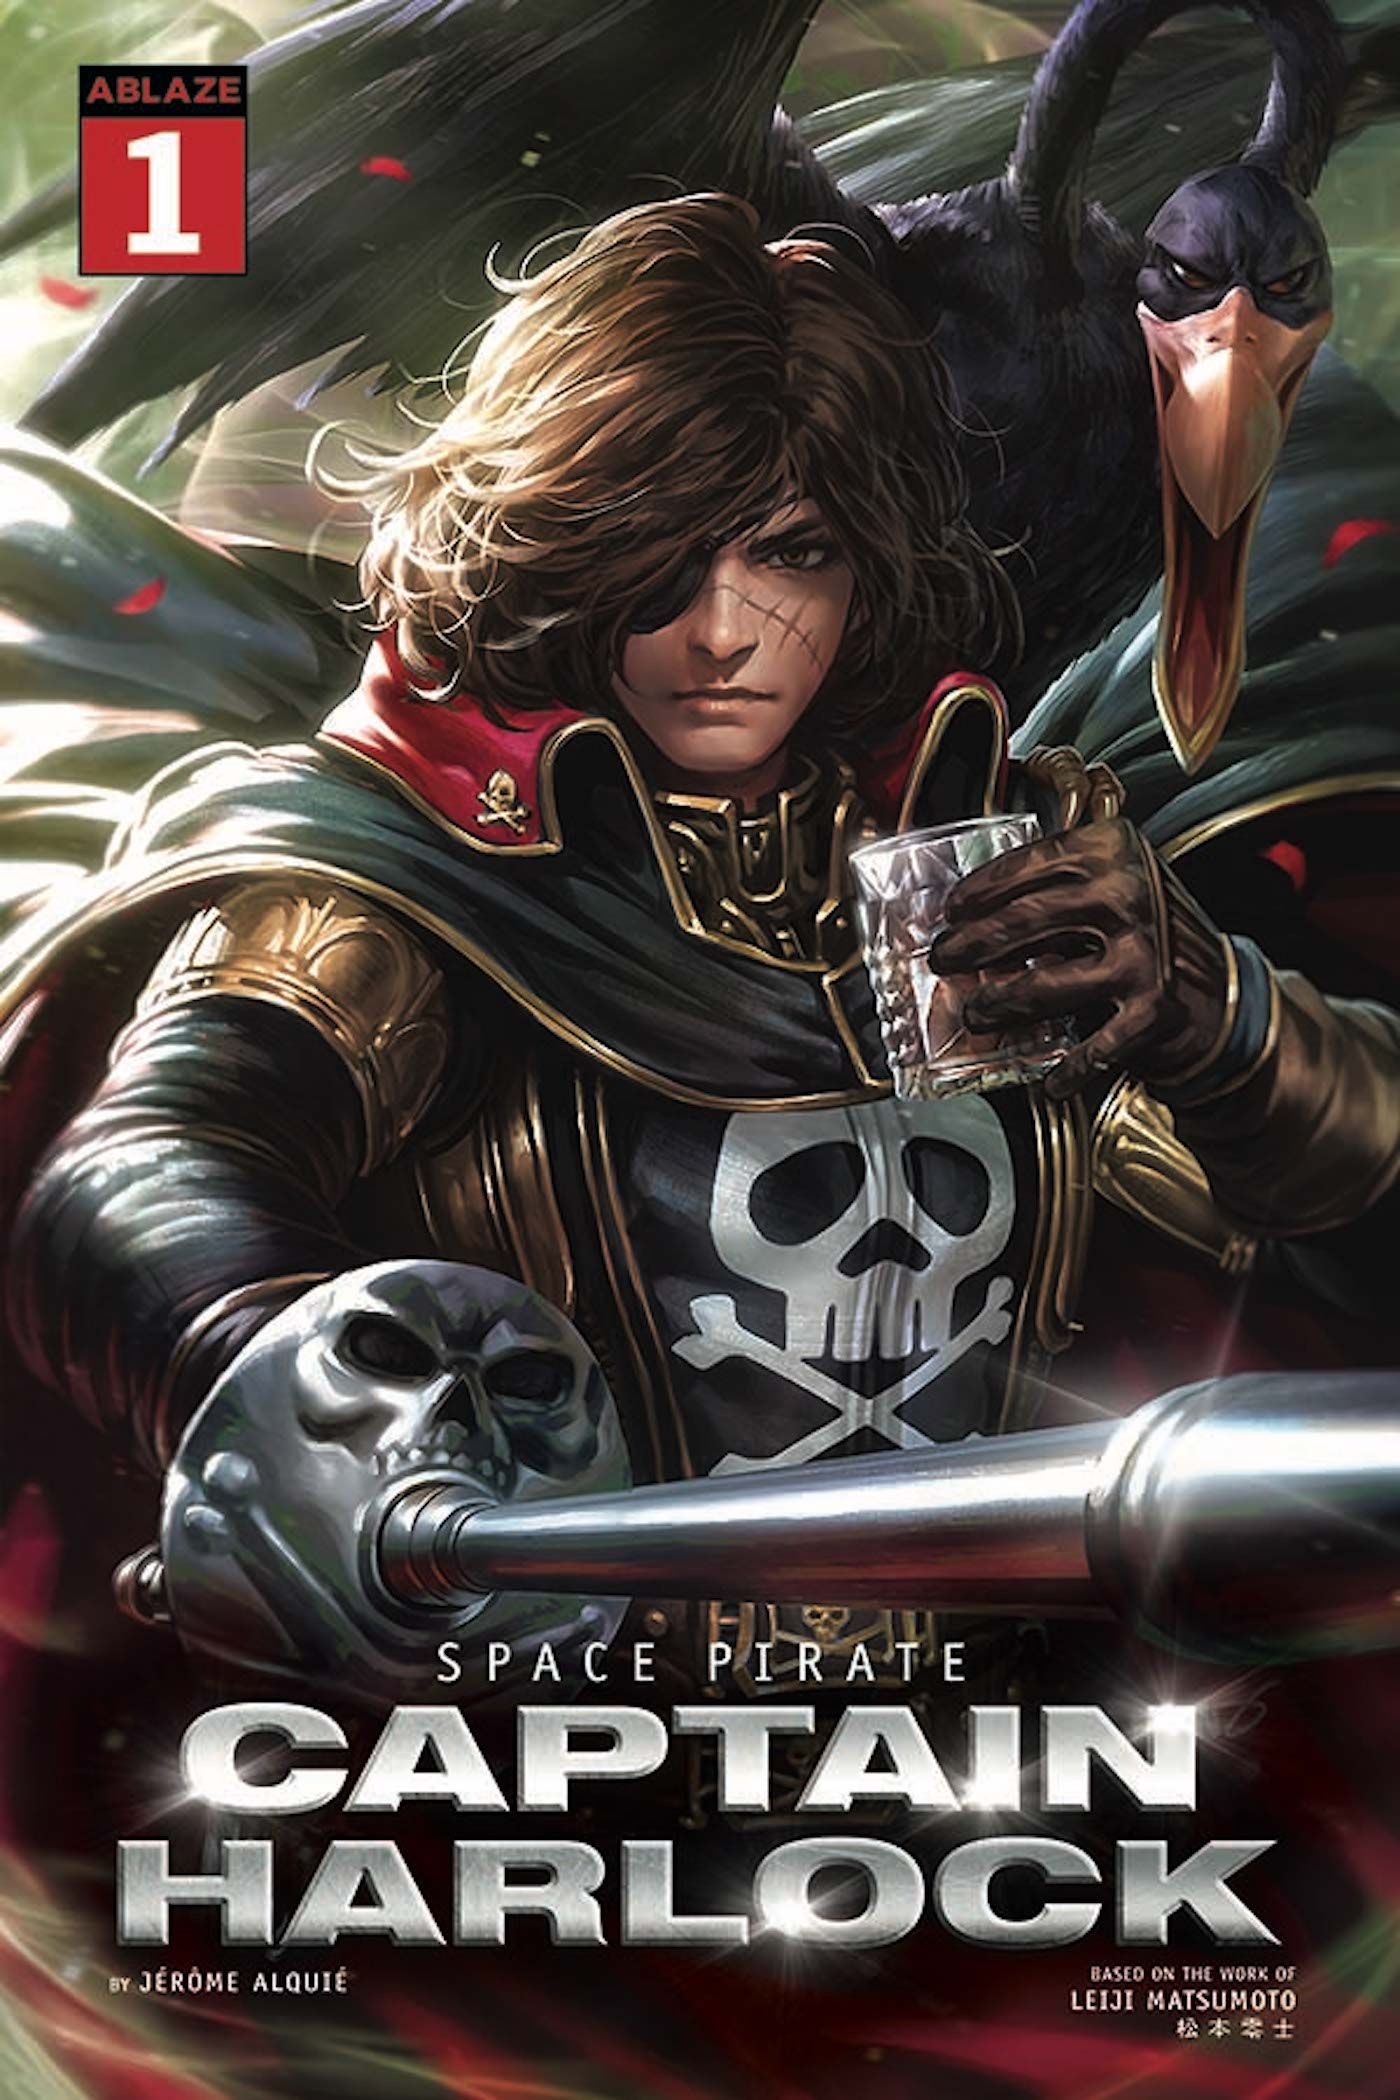 Space Pirate Captain Harlock #1 cover